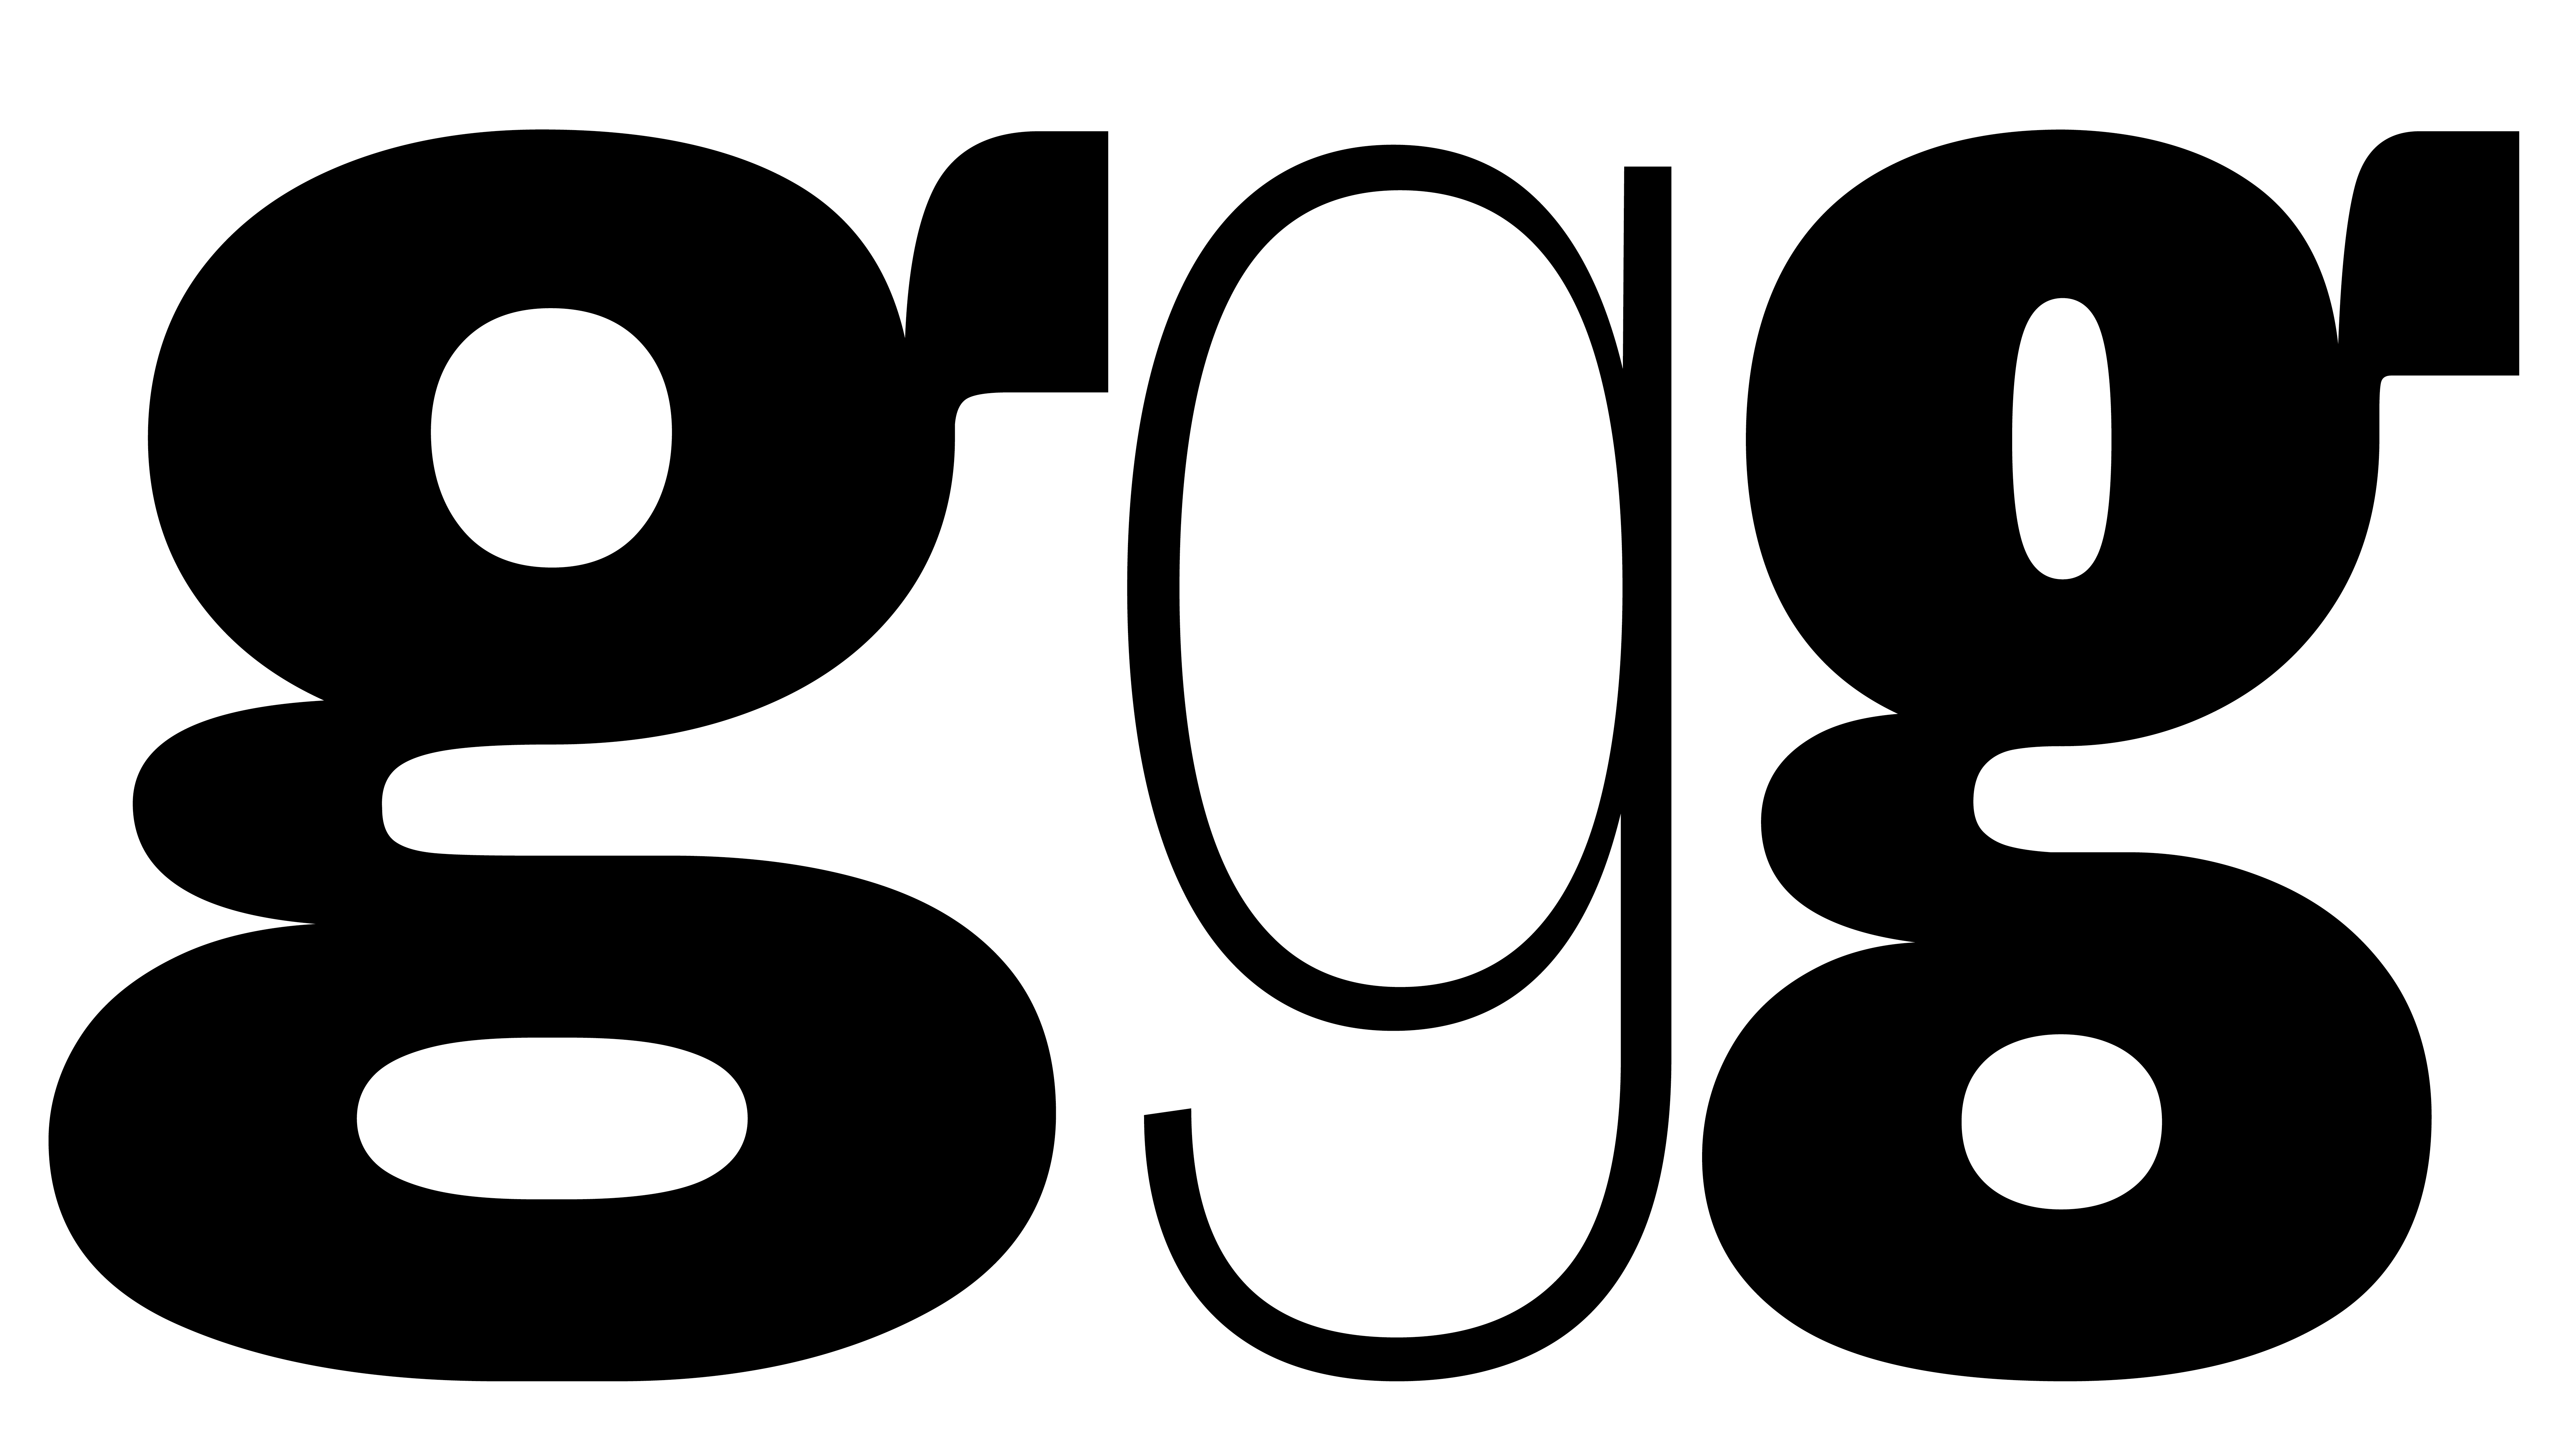 Kern Typeface